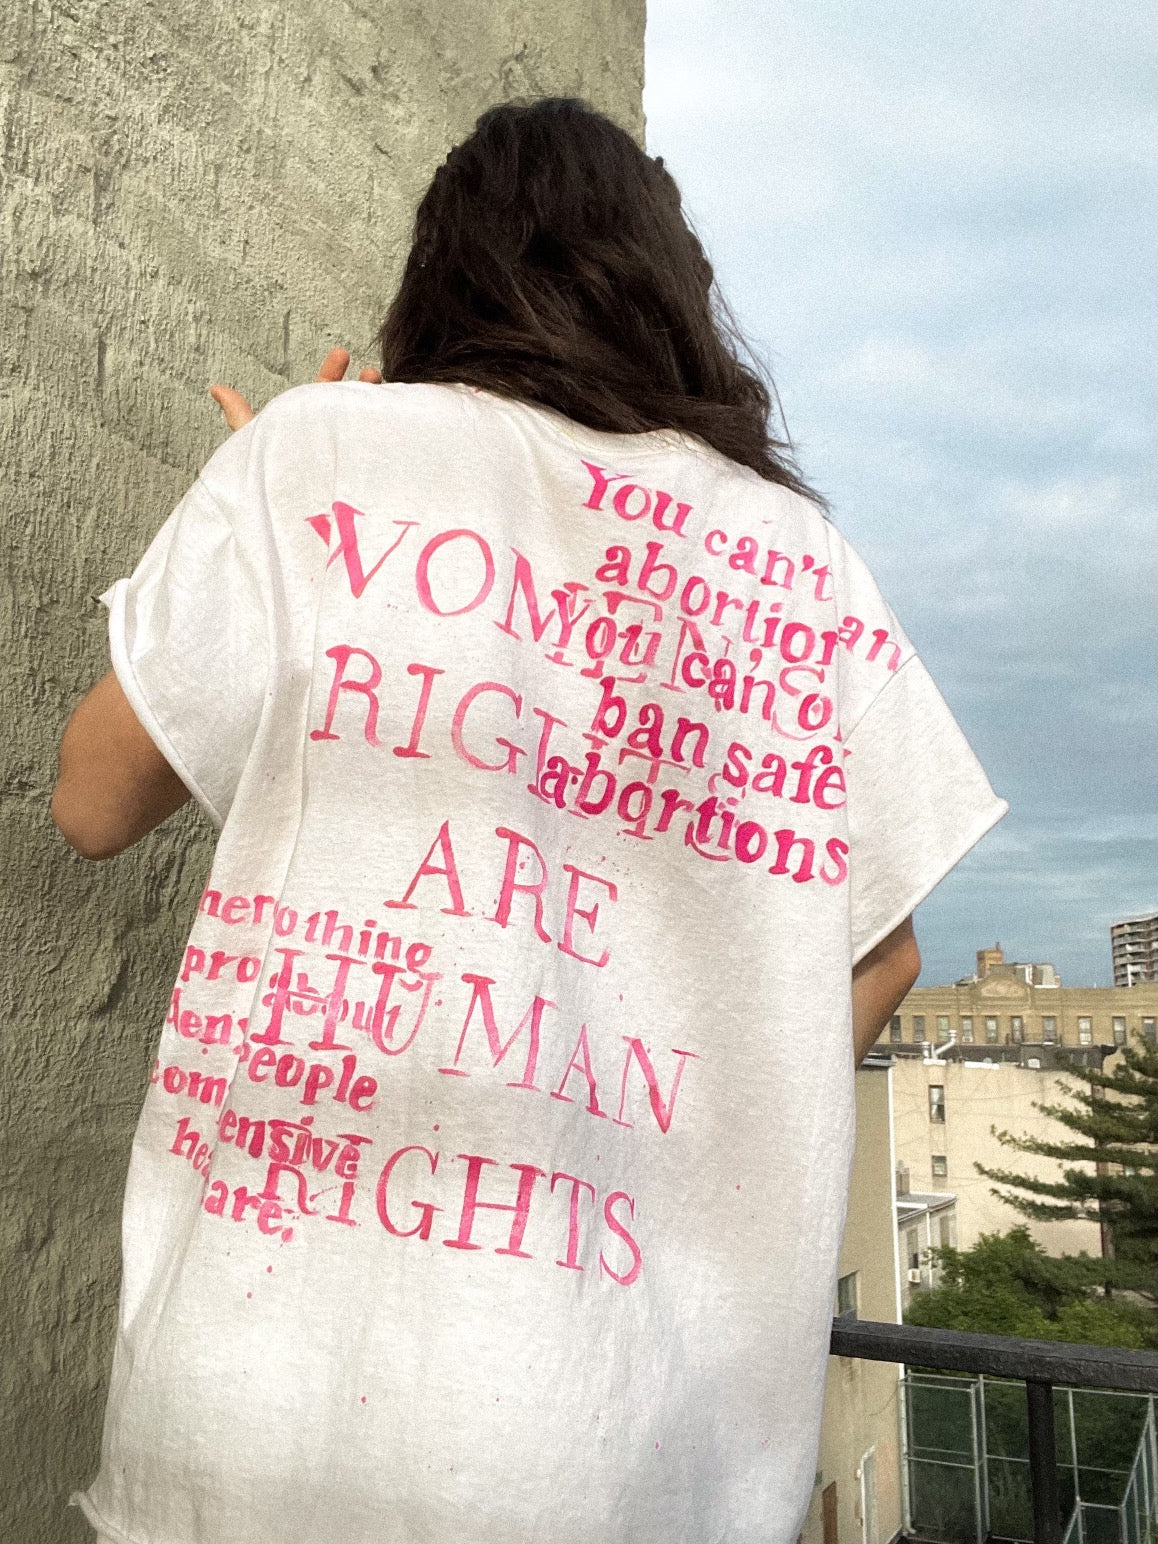 Women's Rights T-shirt